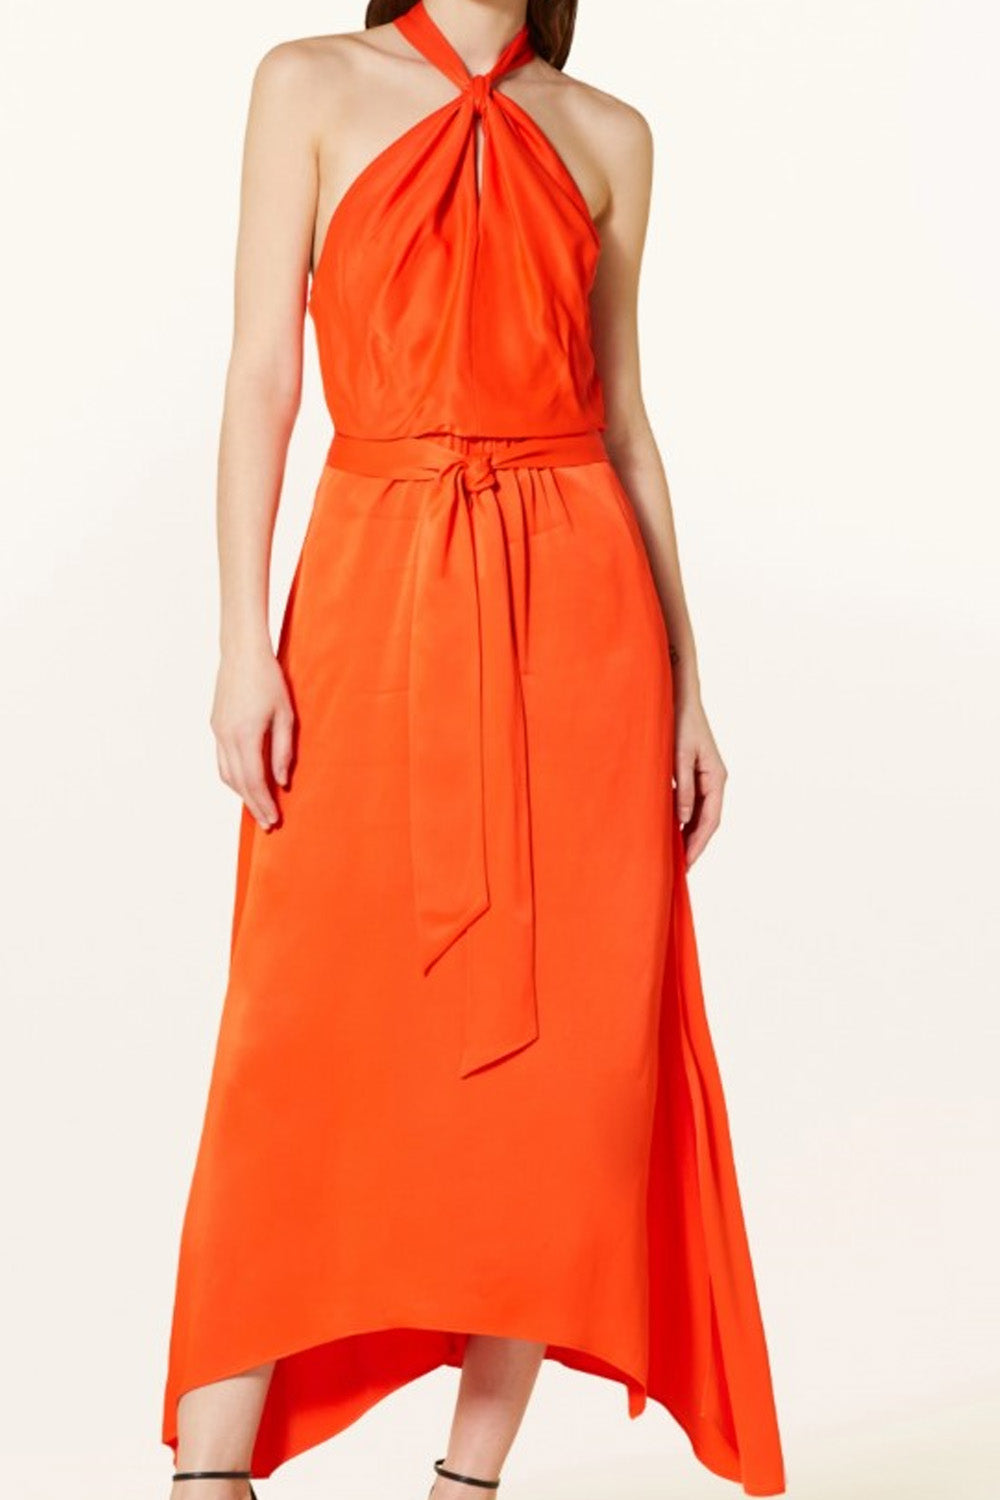 Oceanscape Orange Dress